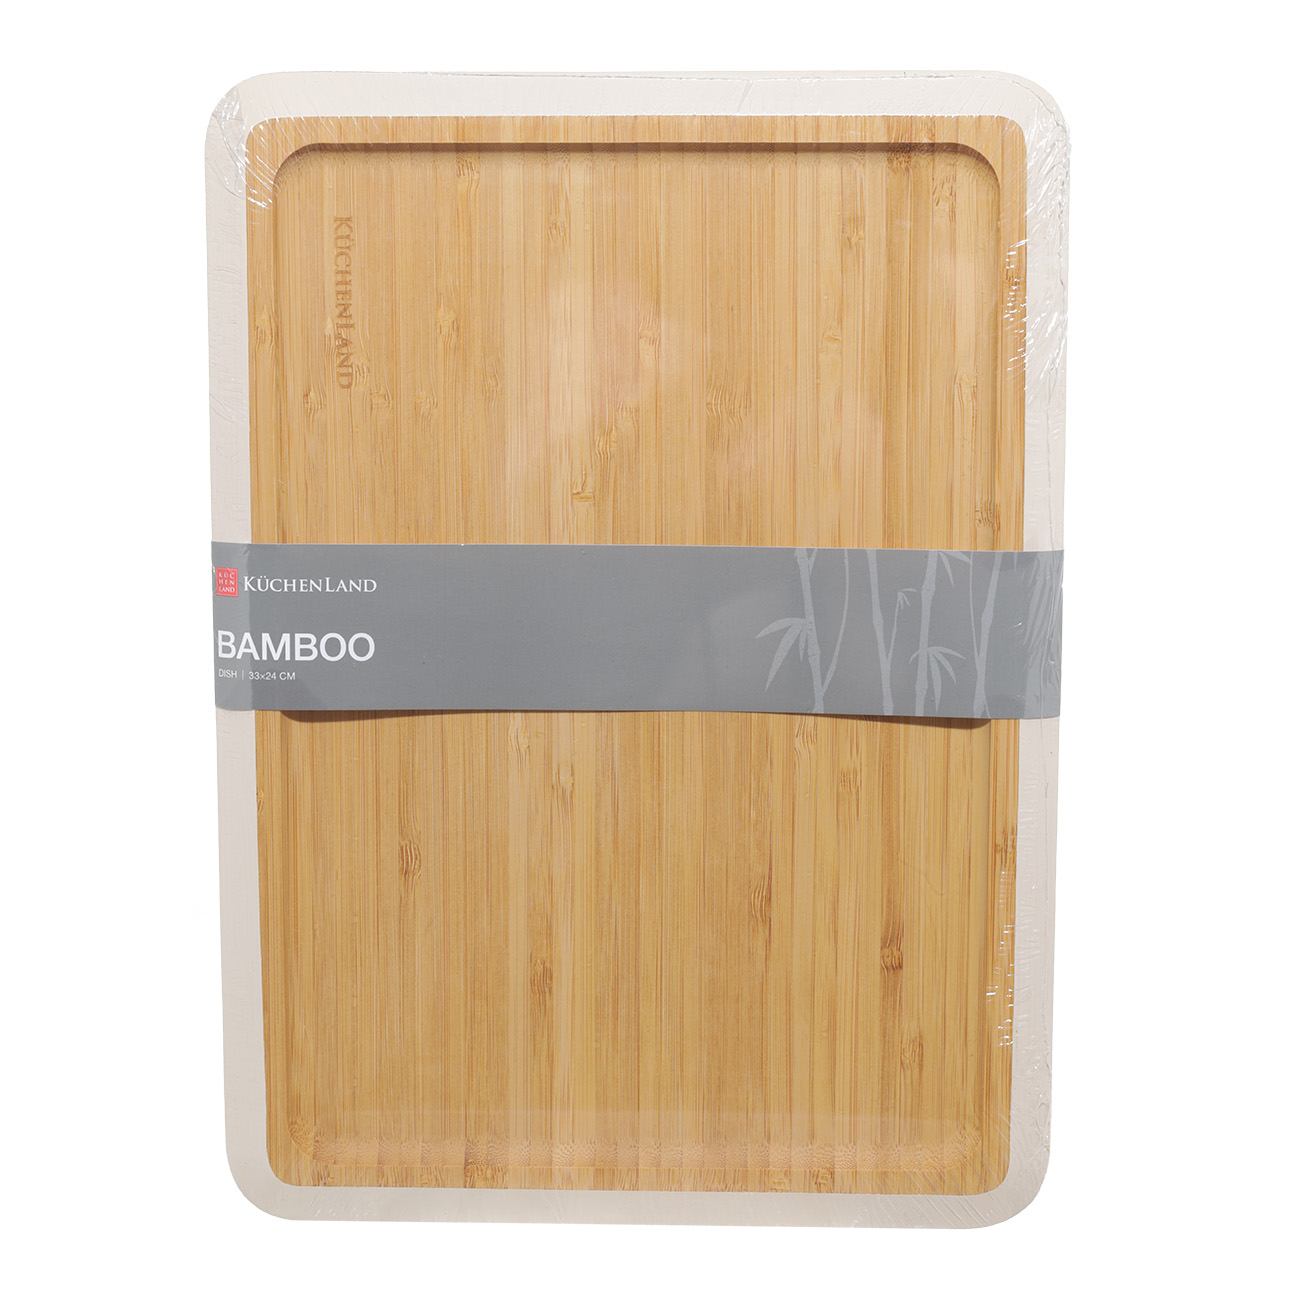 Dish, 33x24 cm, bamboo, rectangular, milk edging, Bamboo soft изображение № 2